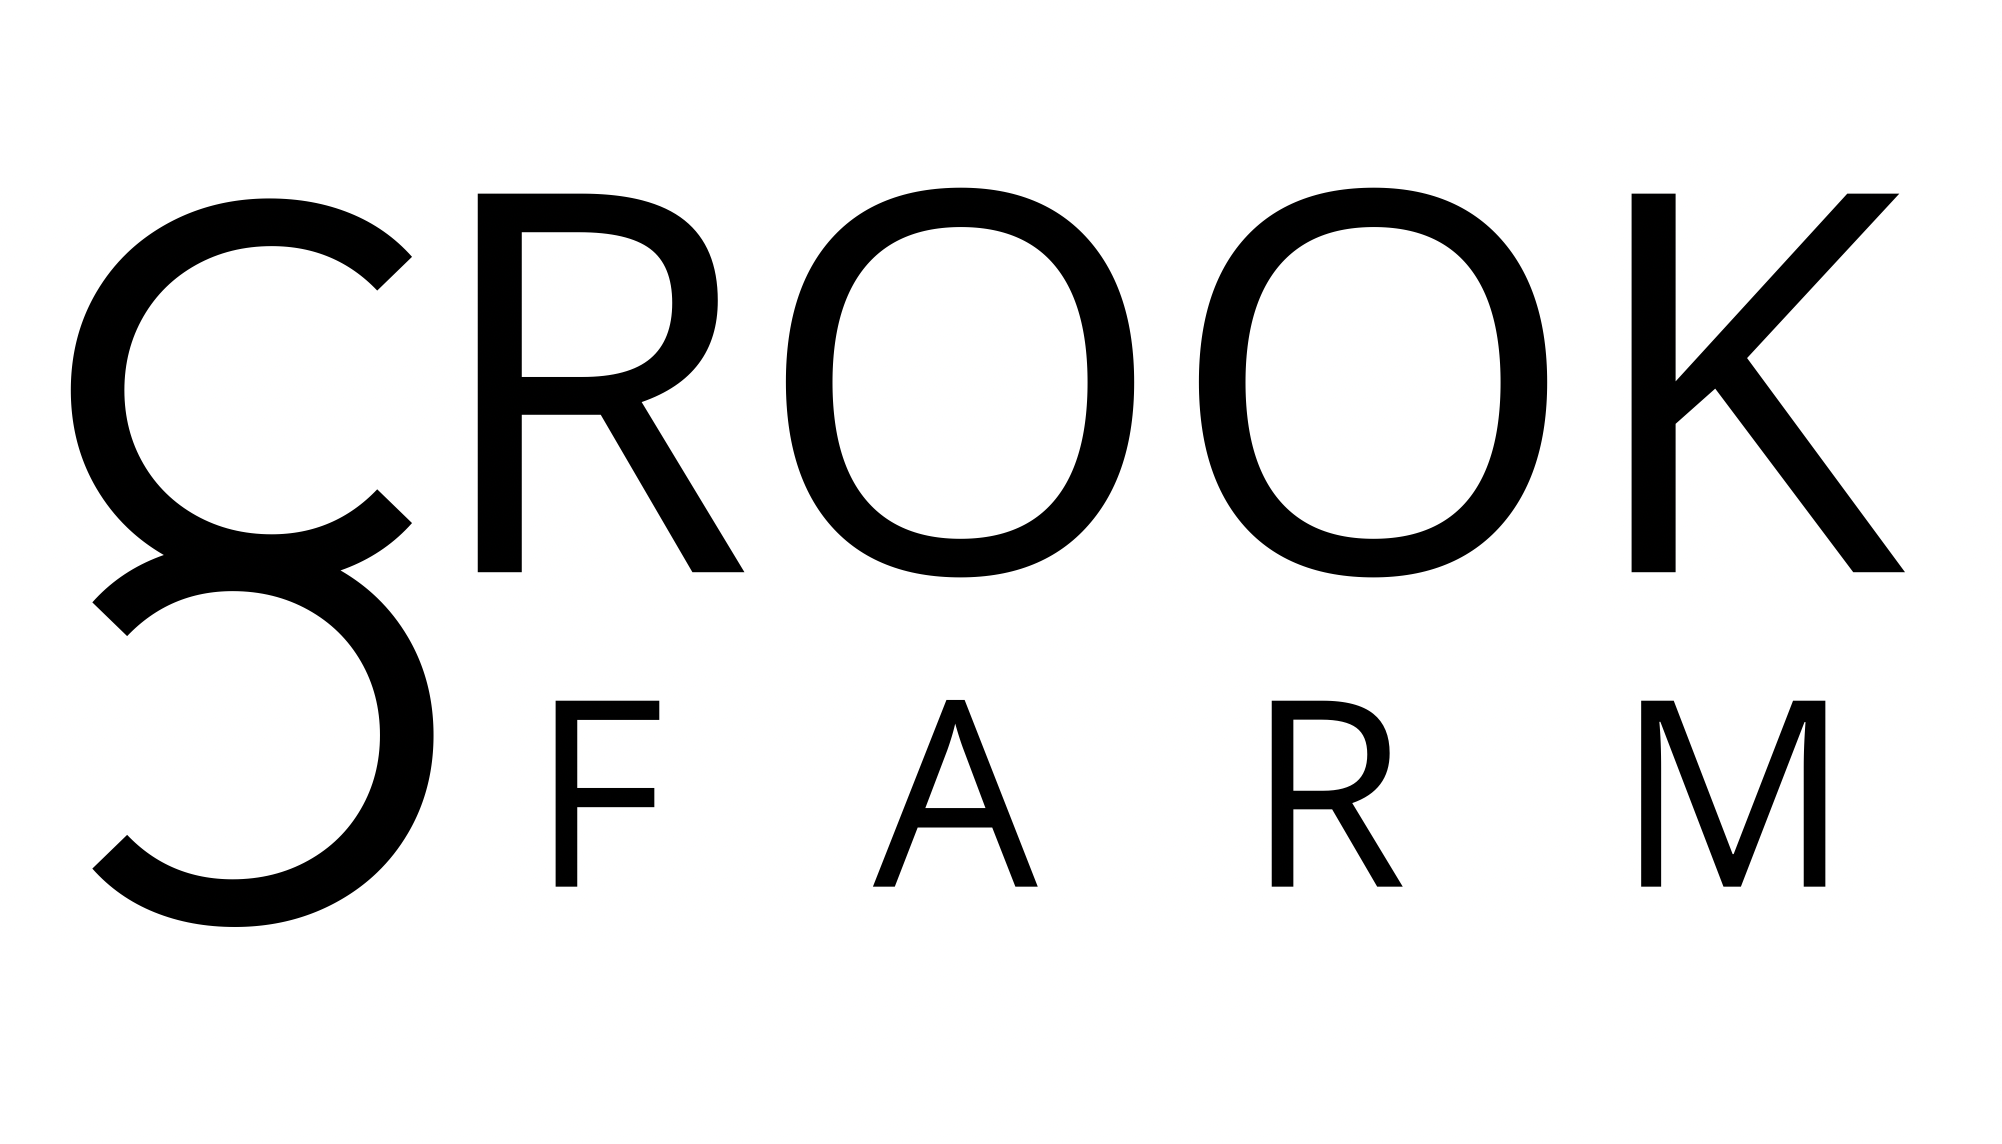 CCrook Farm